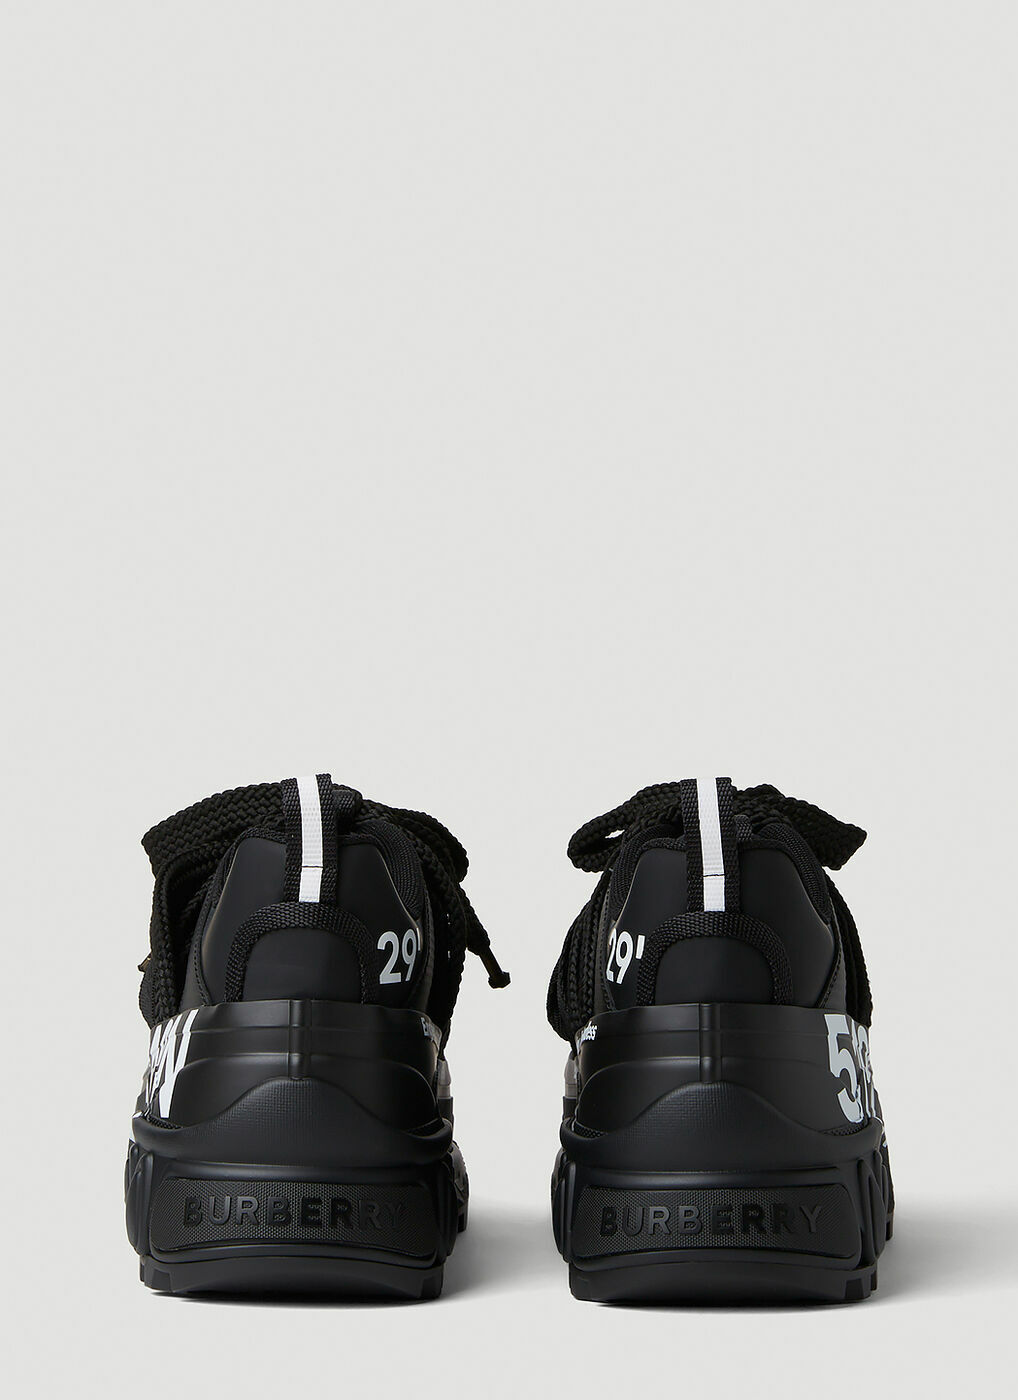 Burberry - Coordinates Print Arthur Sneakers in Black Burberry